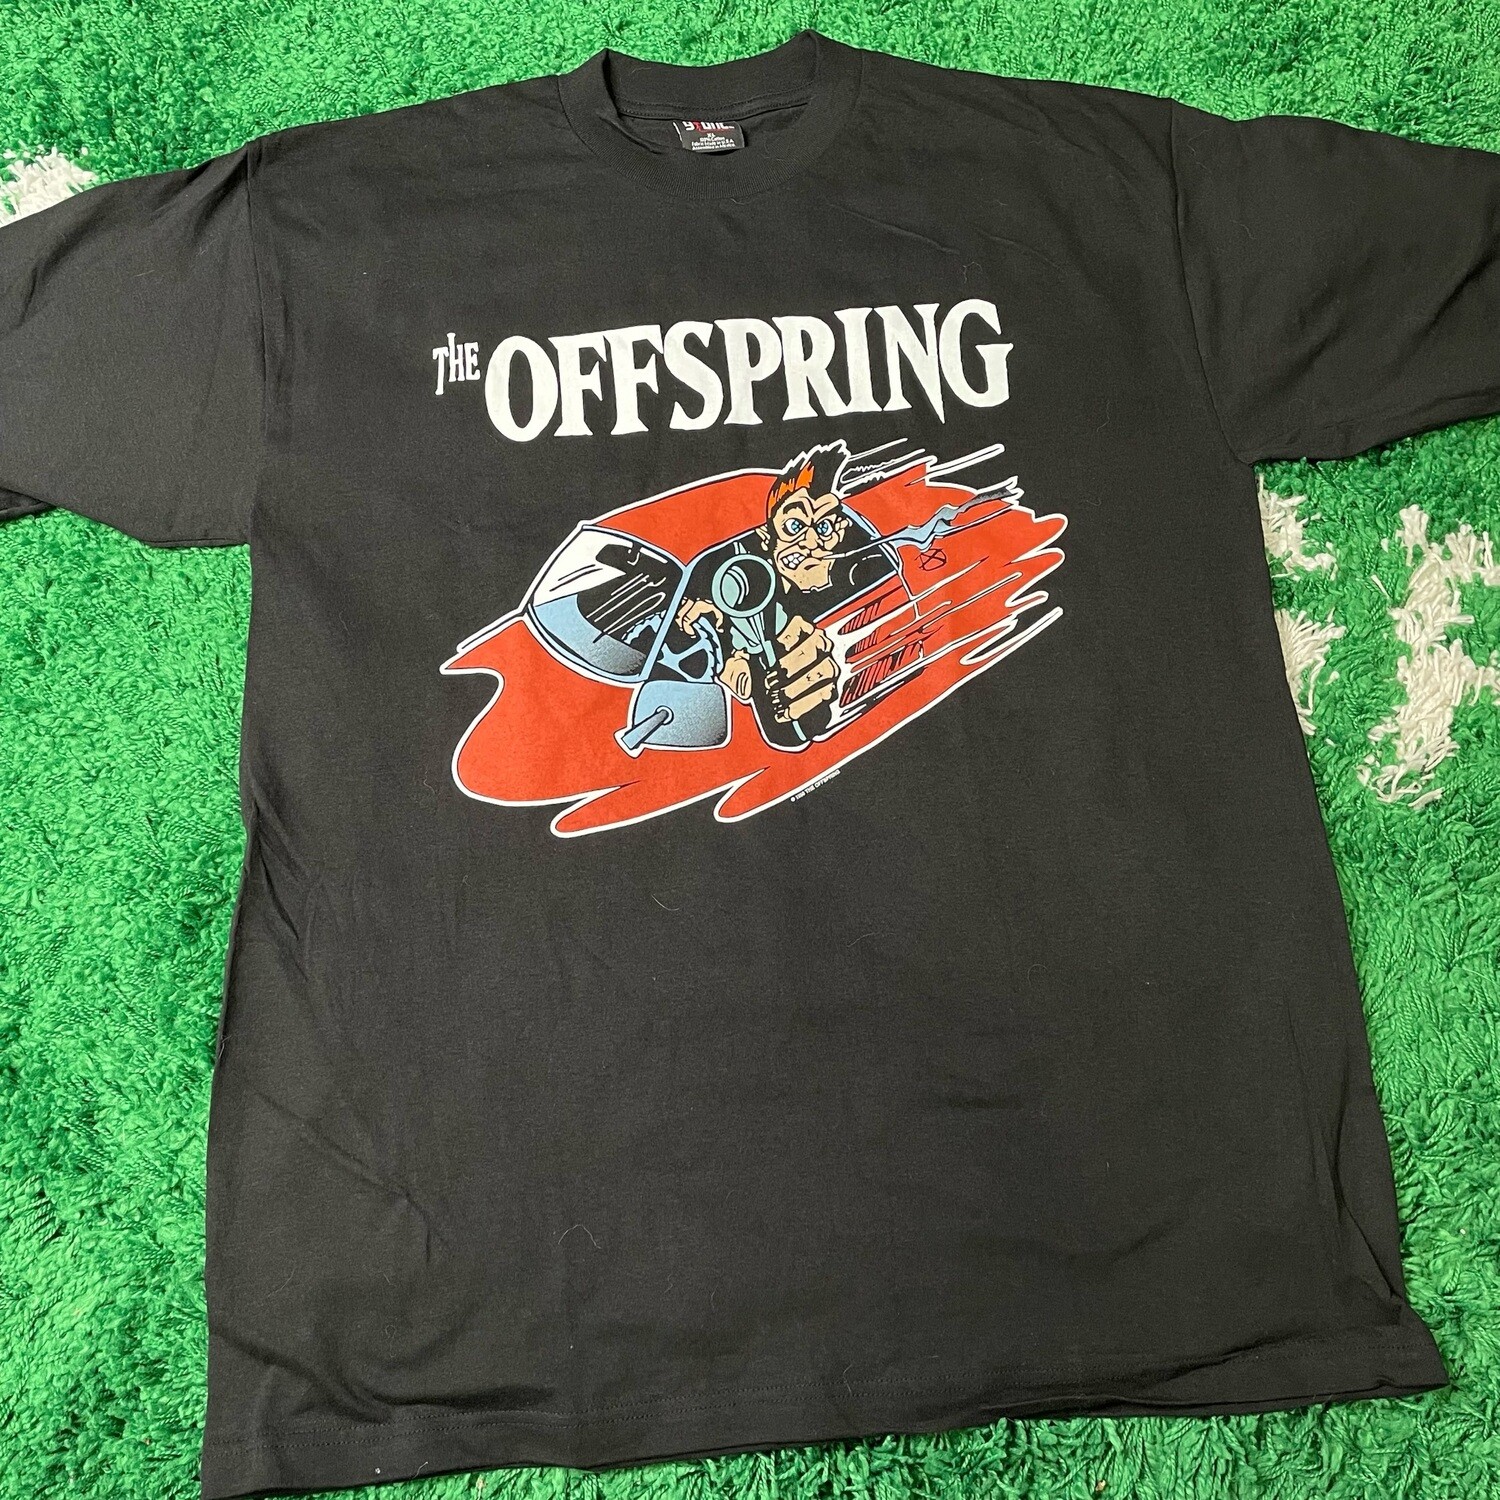 The Offspring Stupid Dumbshit 1998 Shirt Size XL